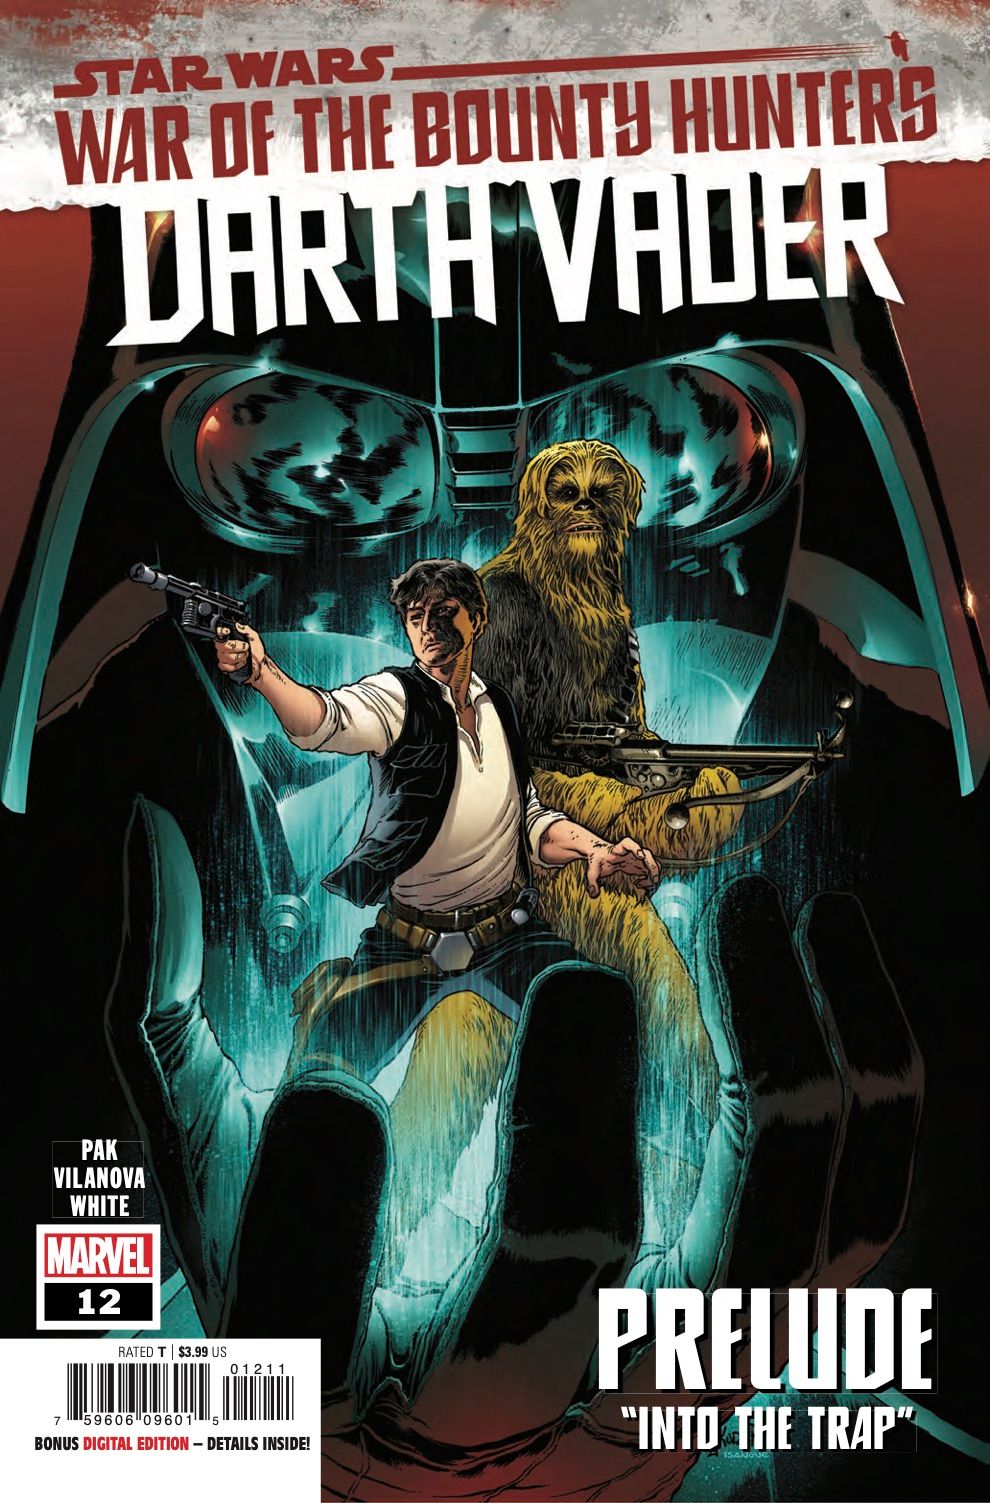 Darth-Vader-12-Cover-Image